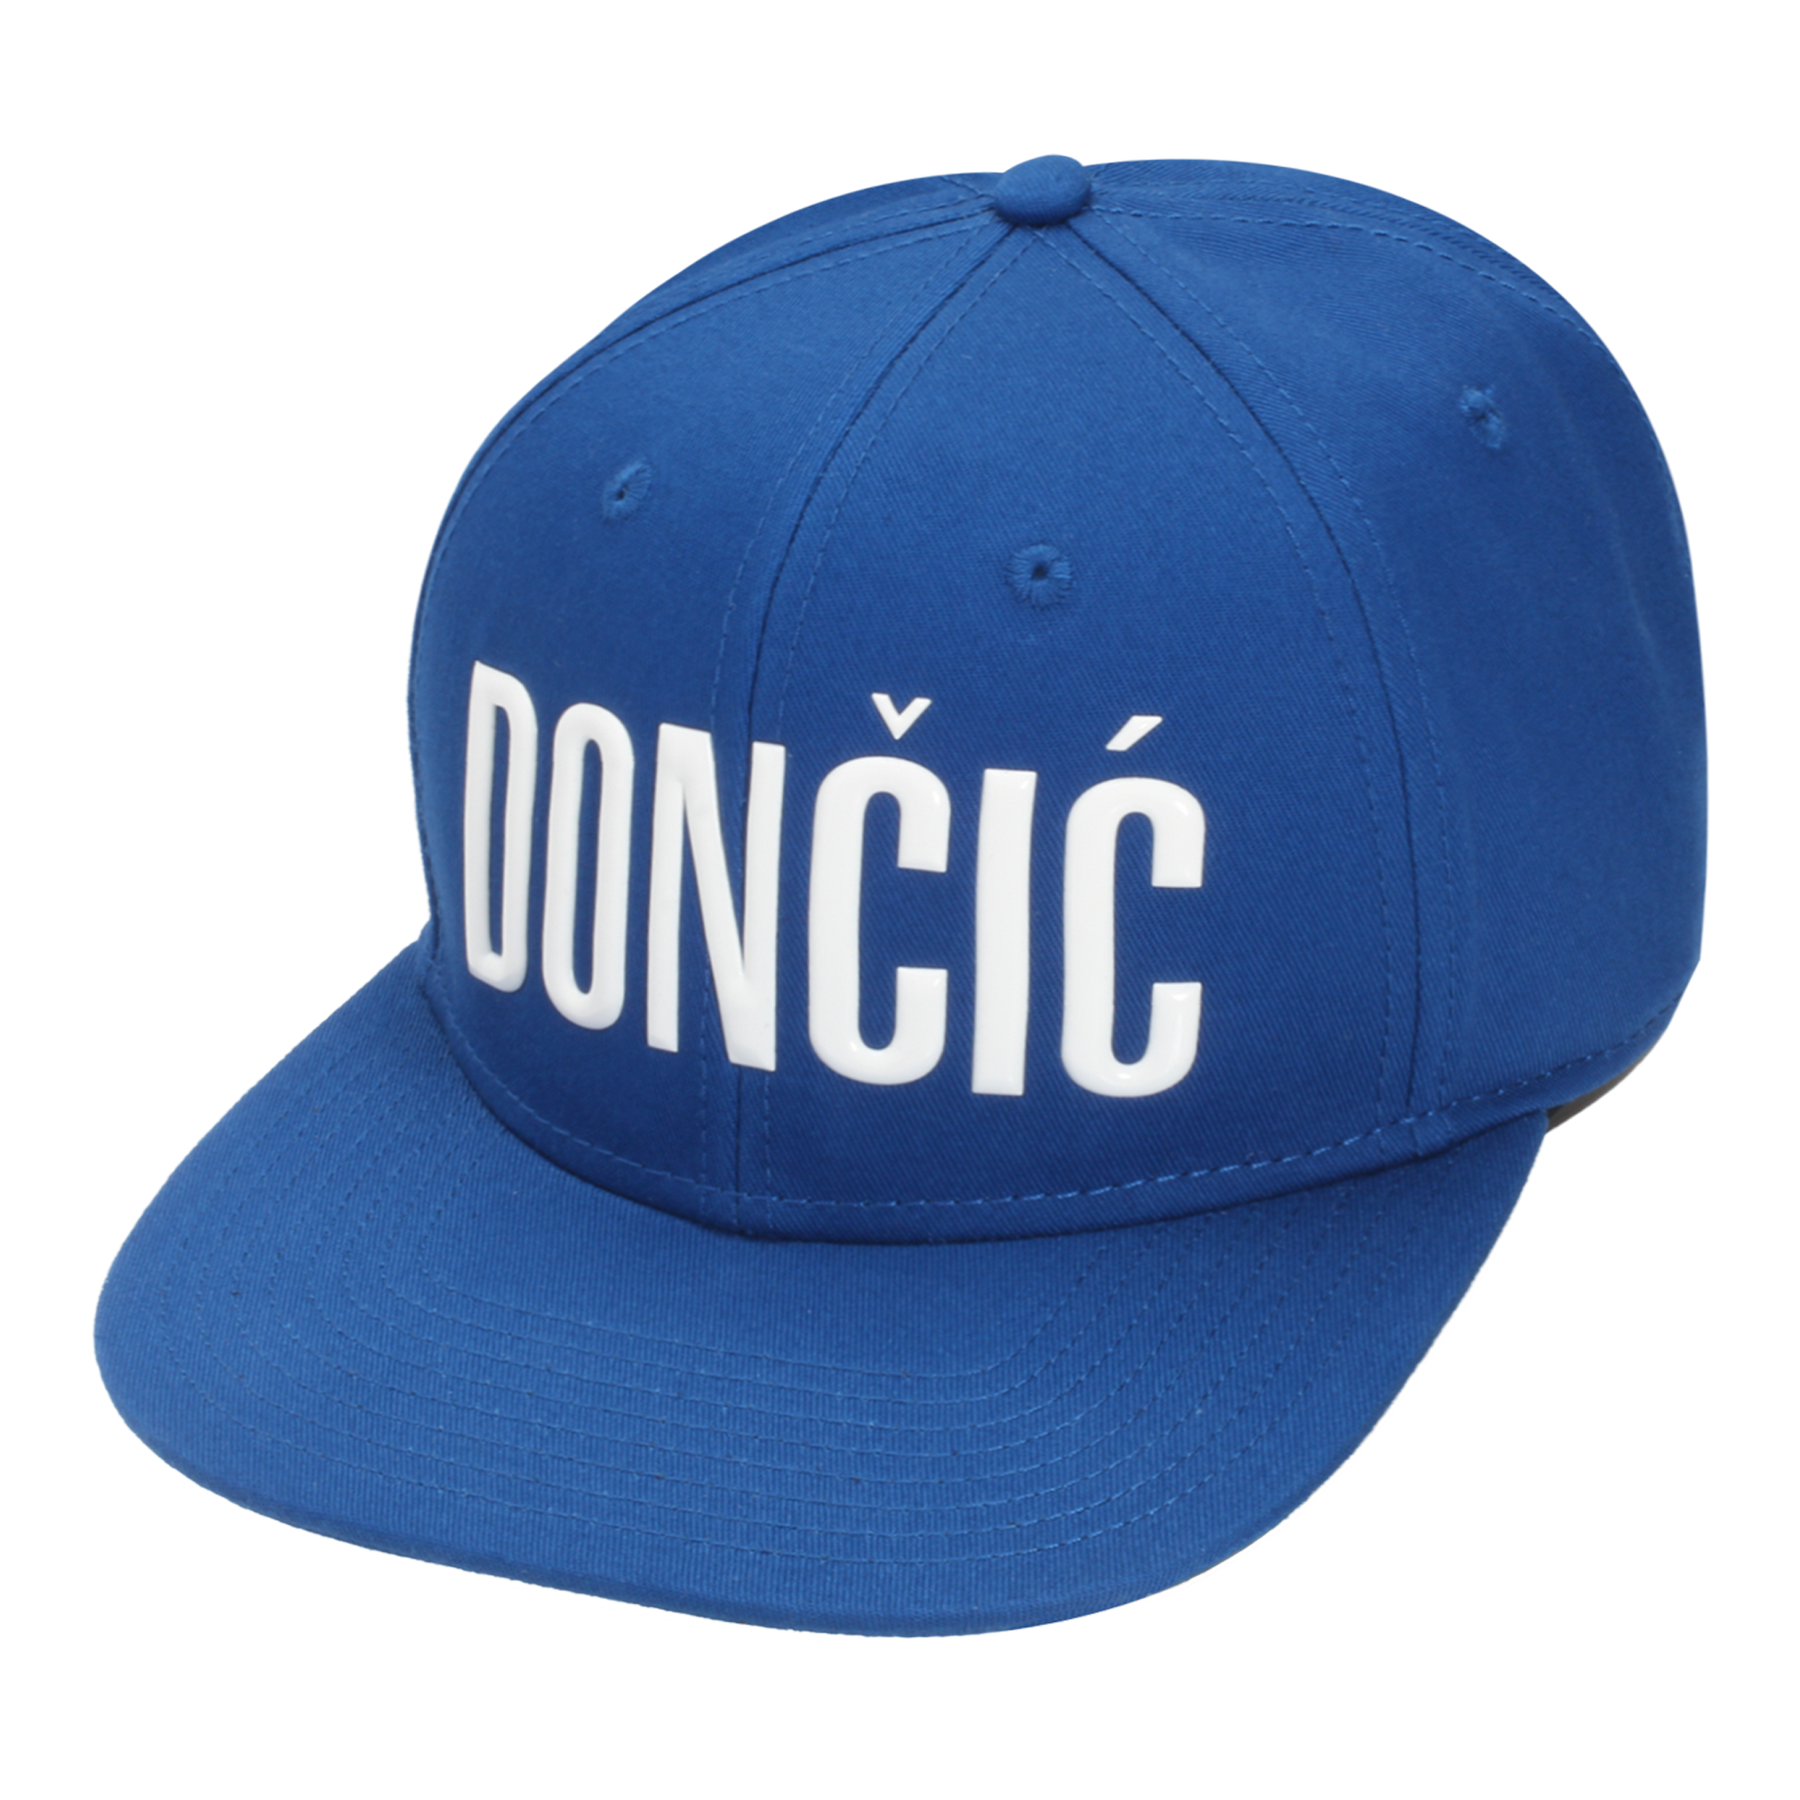 47 Brand / Men's Dallas Mavericks Luka Doncic #77 White Super